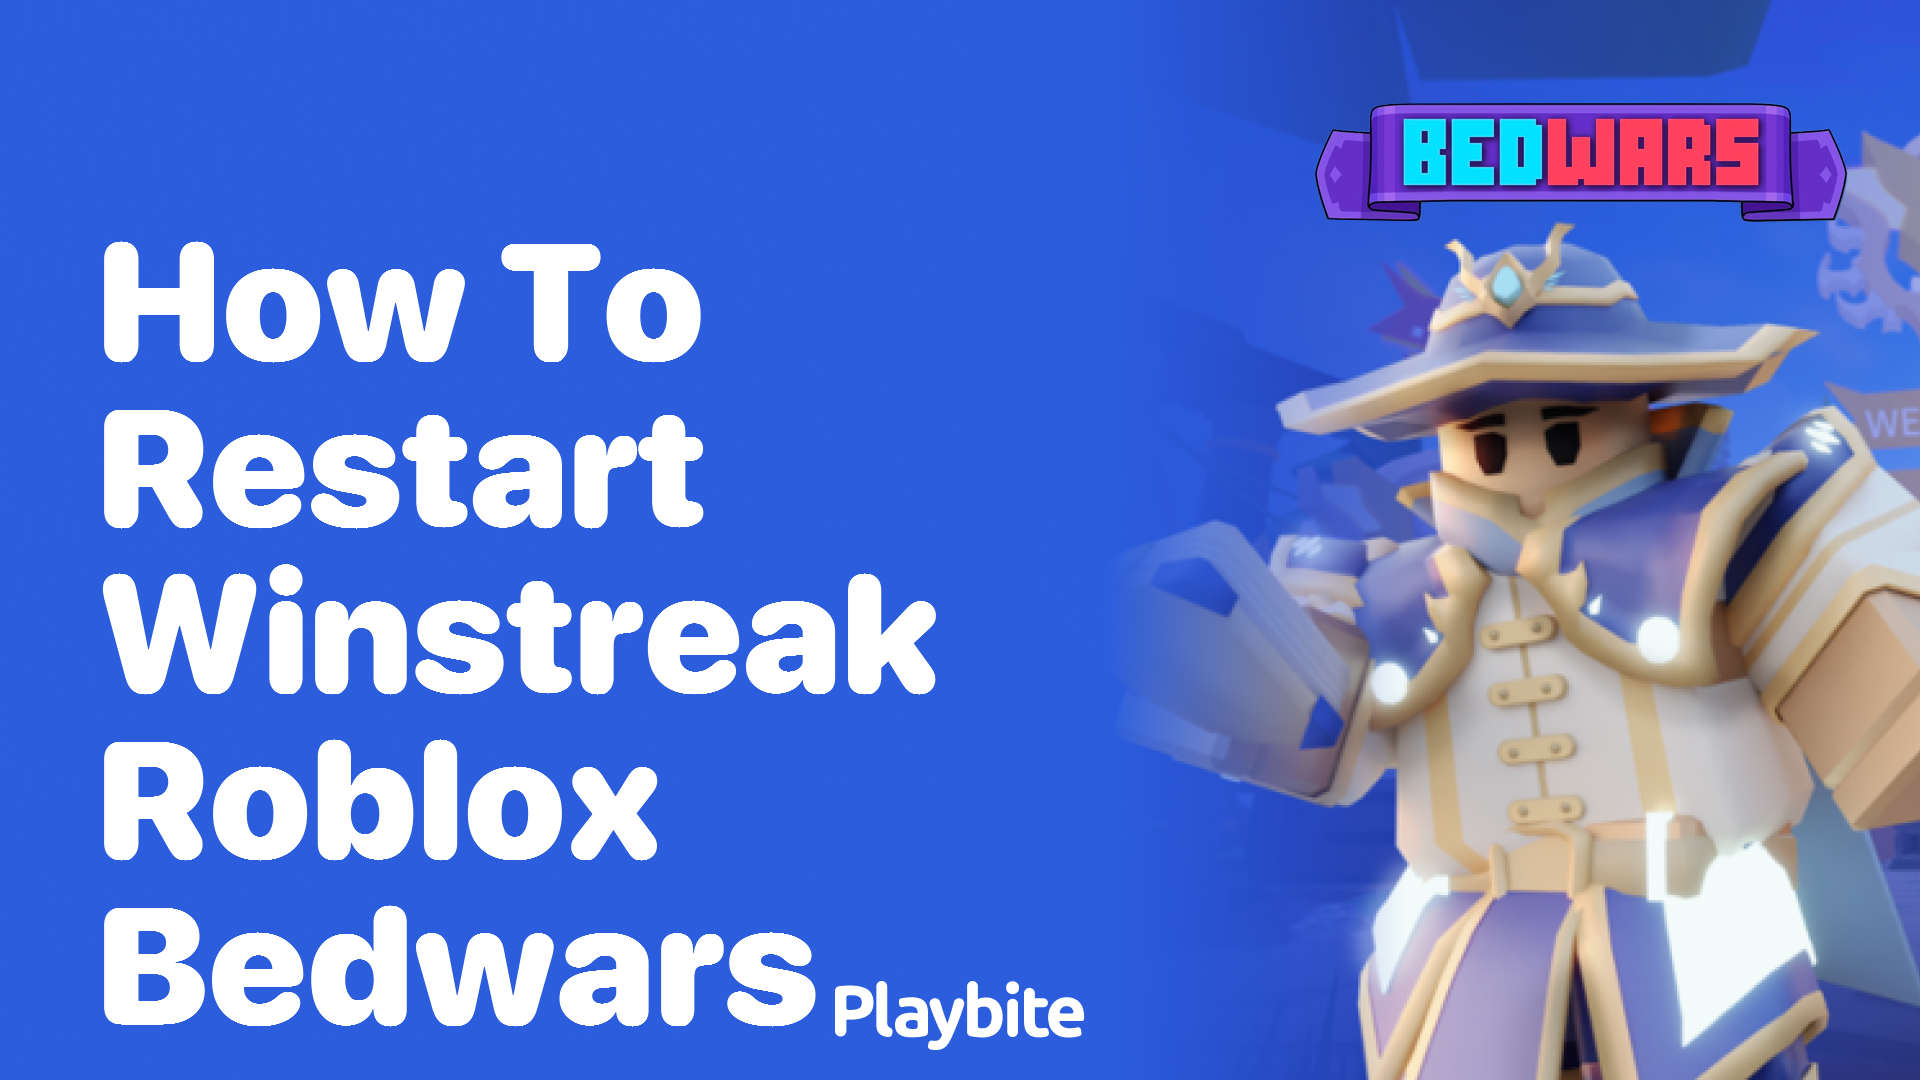 How to Restart Your Win Streak in Roblox Bedwars